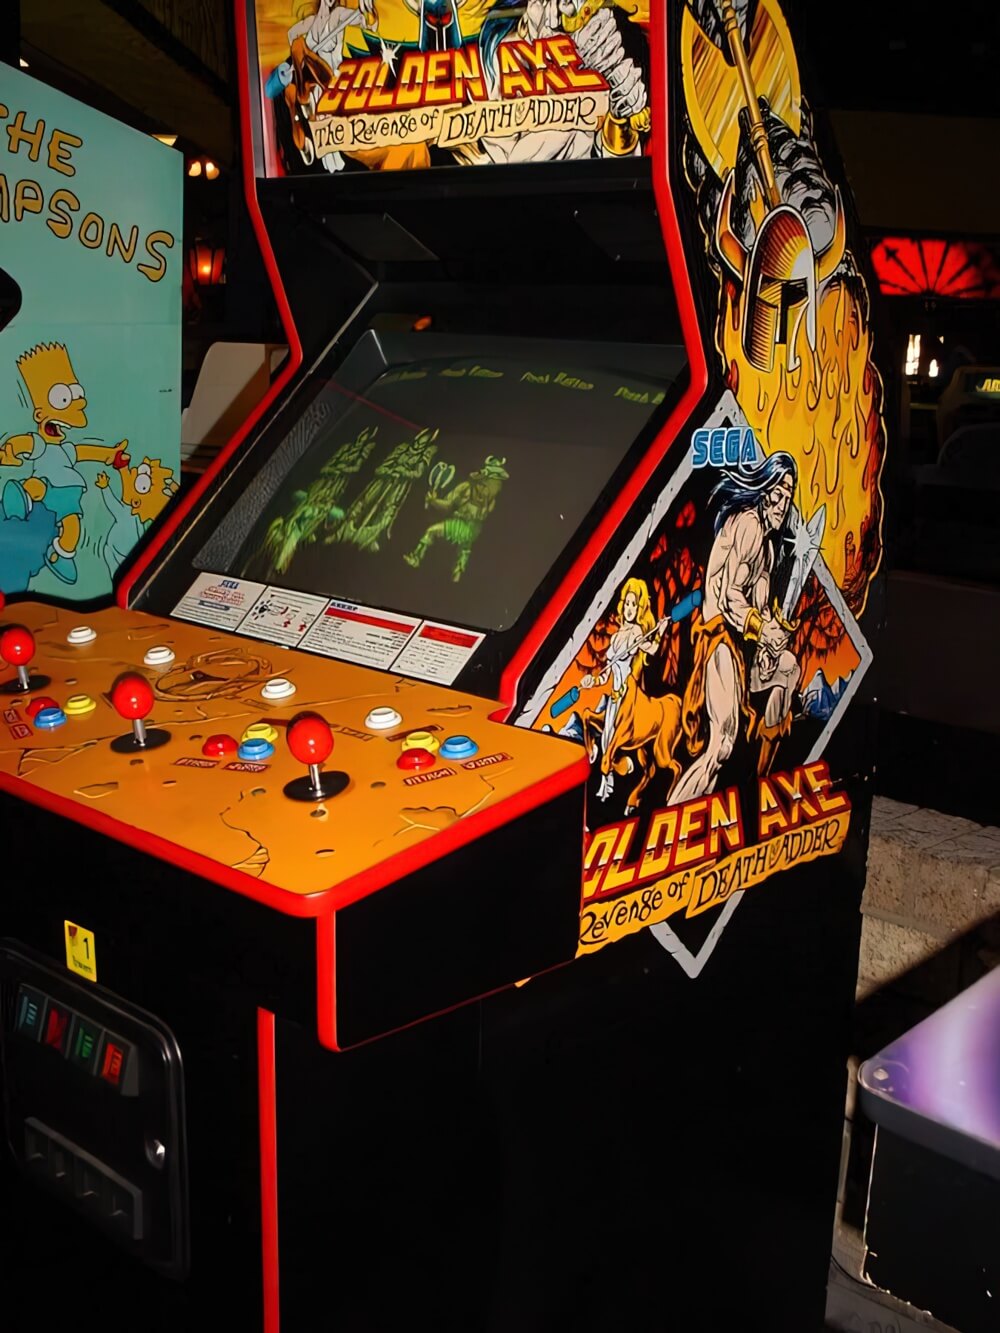 Игровой автомат Golden Axe The Revenge of Death Adder на Аркадных автоматов